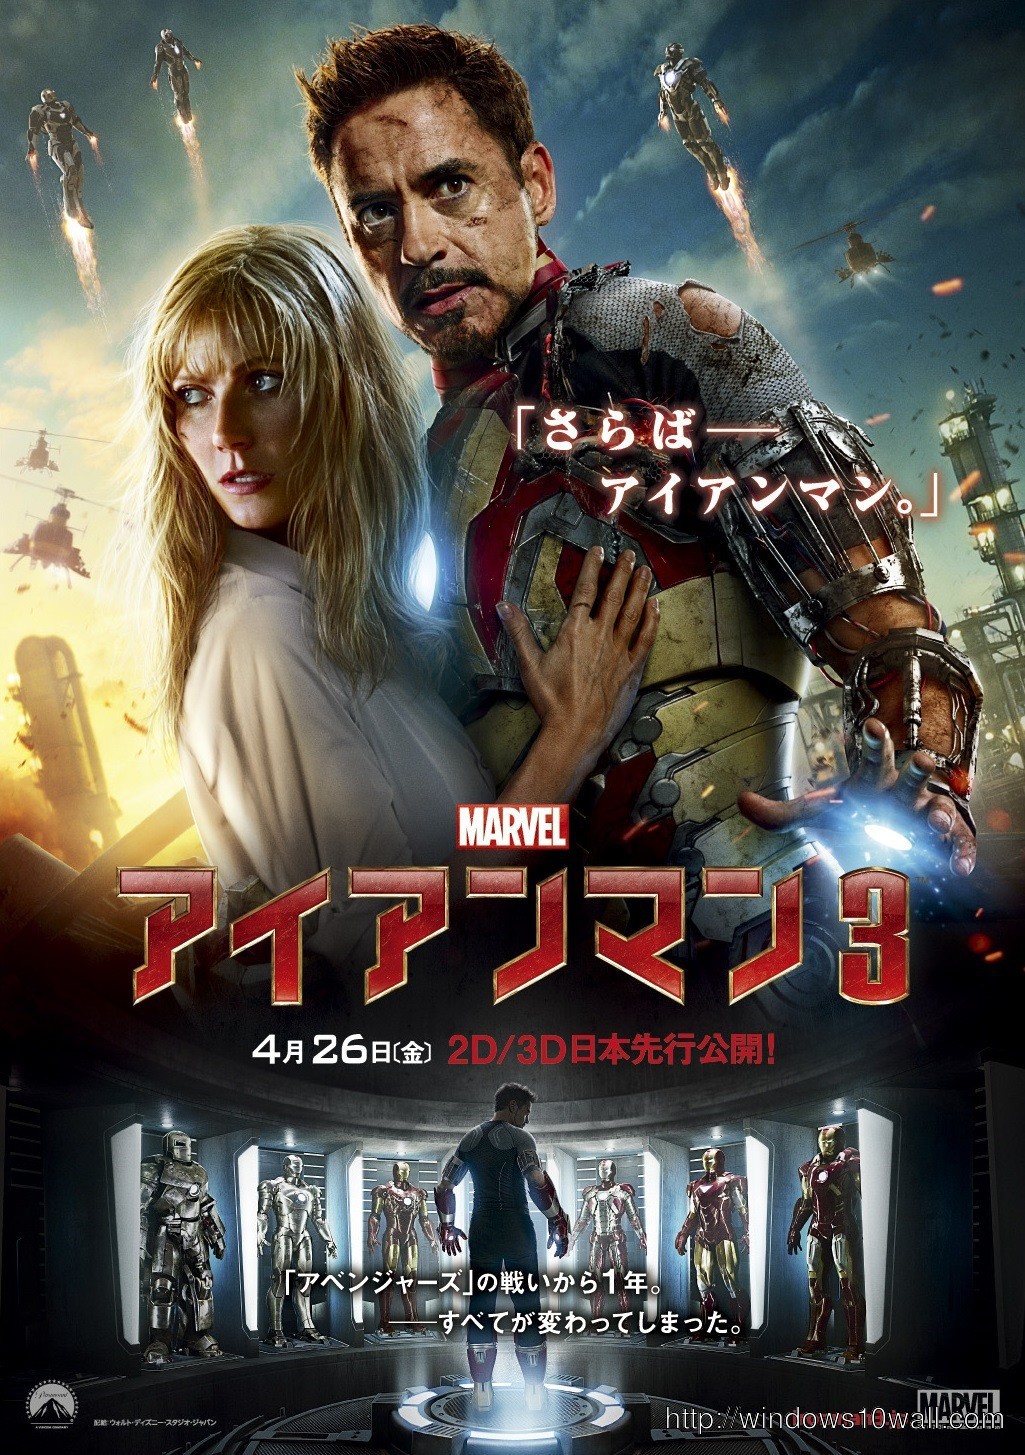 Iron Man 3 hd wallpaper free